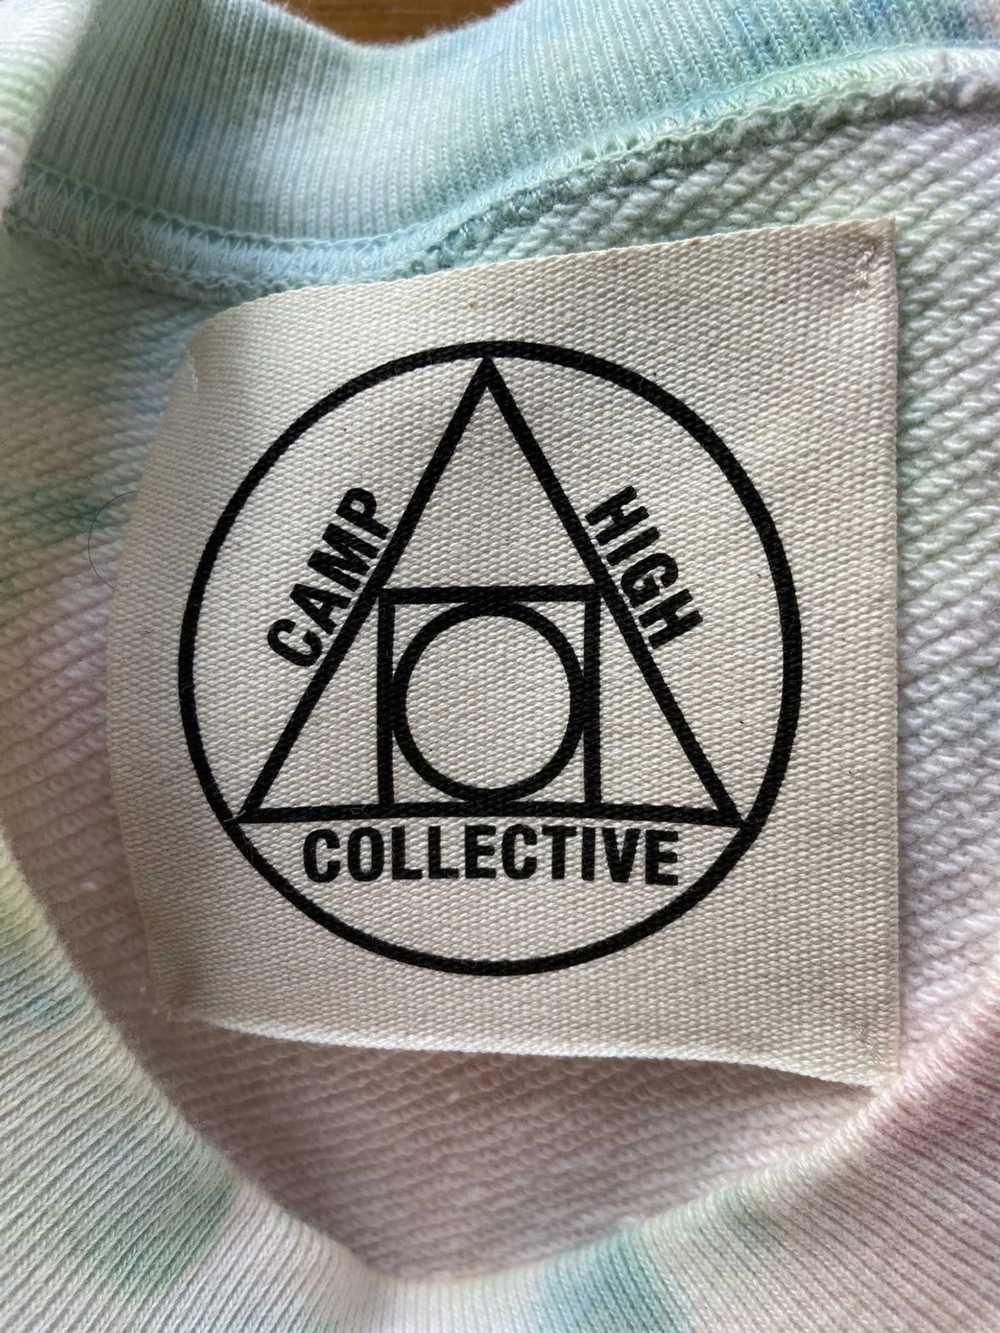 Camp High Camp High tie dye sweatshirt XL - image 2